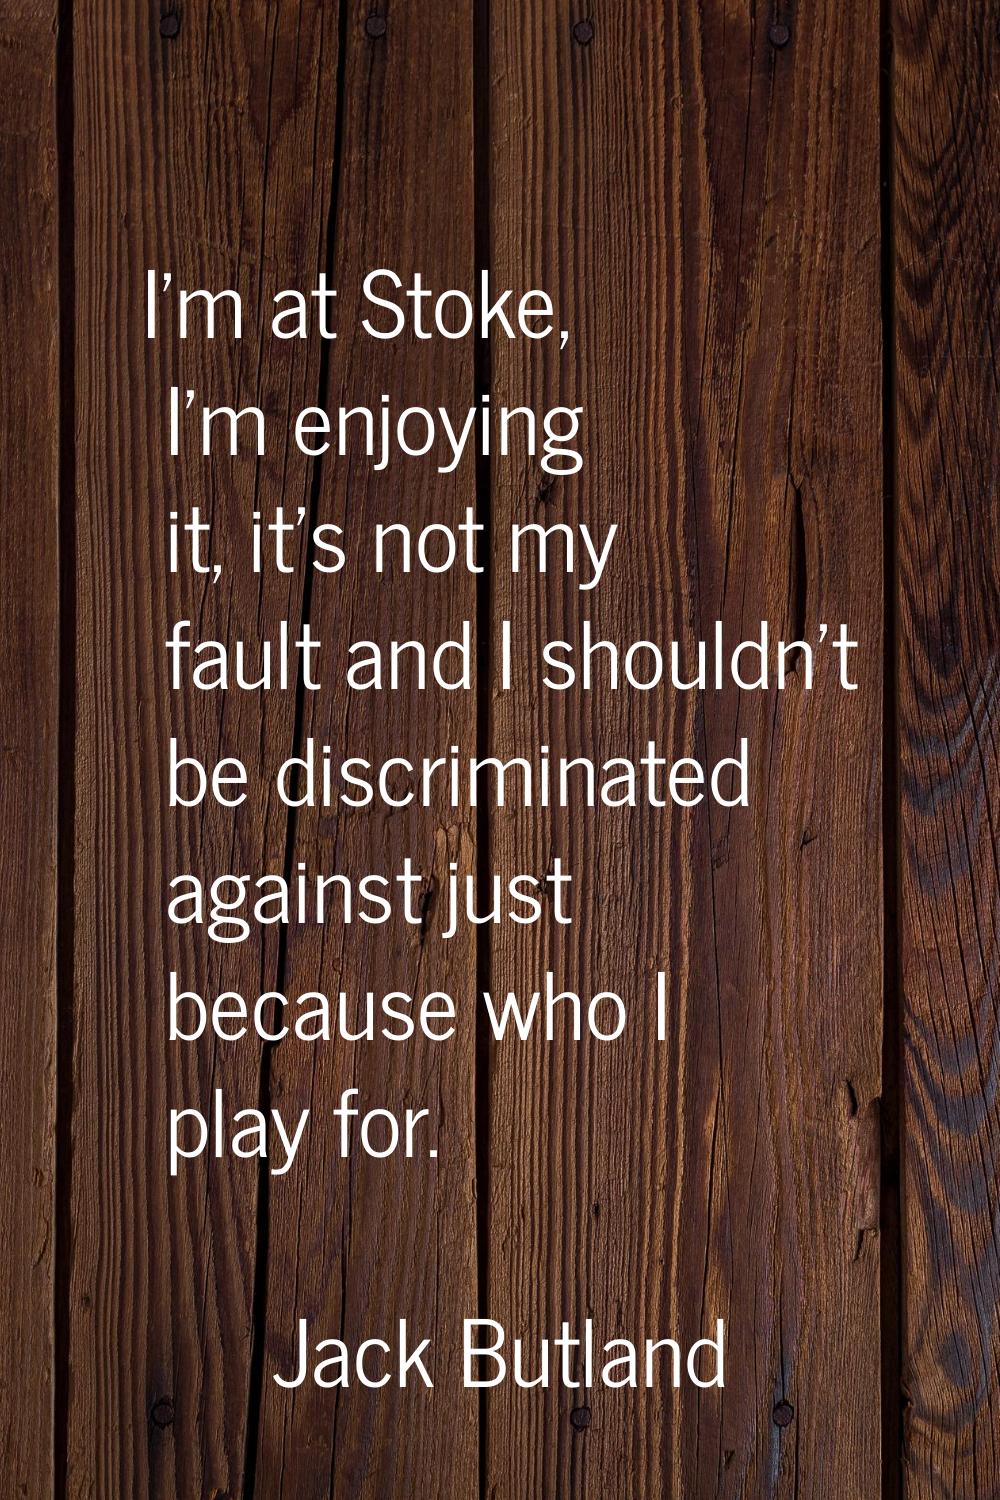 I'm at Stoke, I'm enjoying it, it's not my fault and I shouldn't be discriminated against just beca